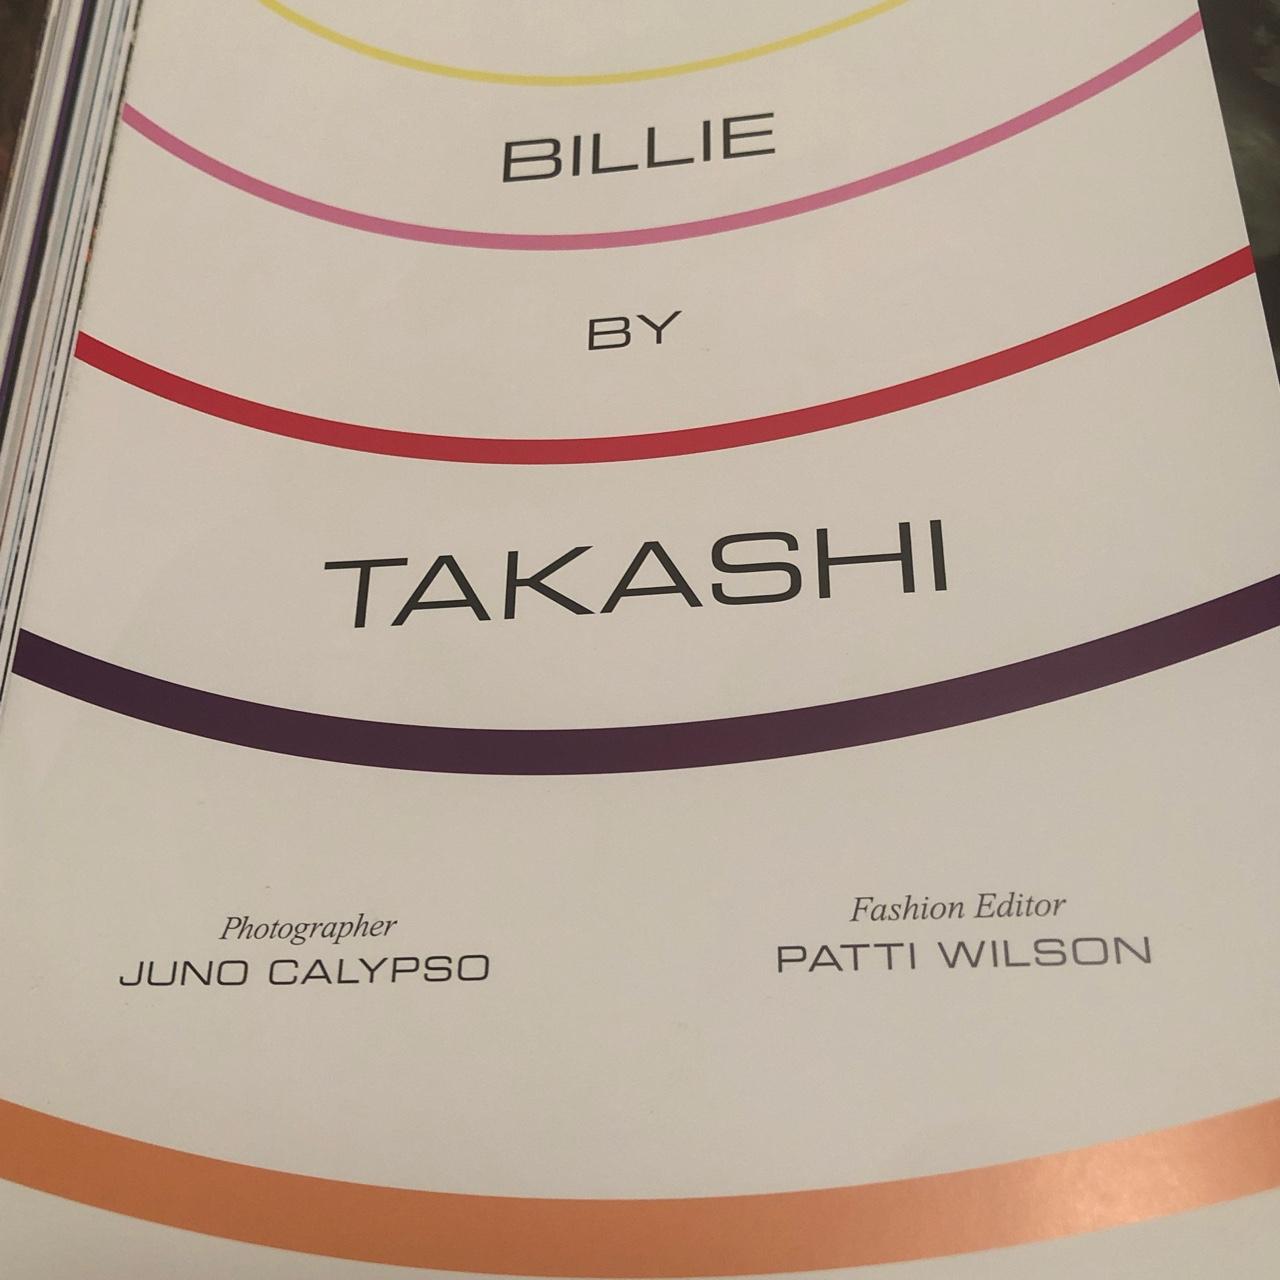 Billie Eilish by Takashi Murakami (Garage Magazine)